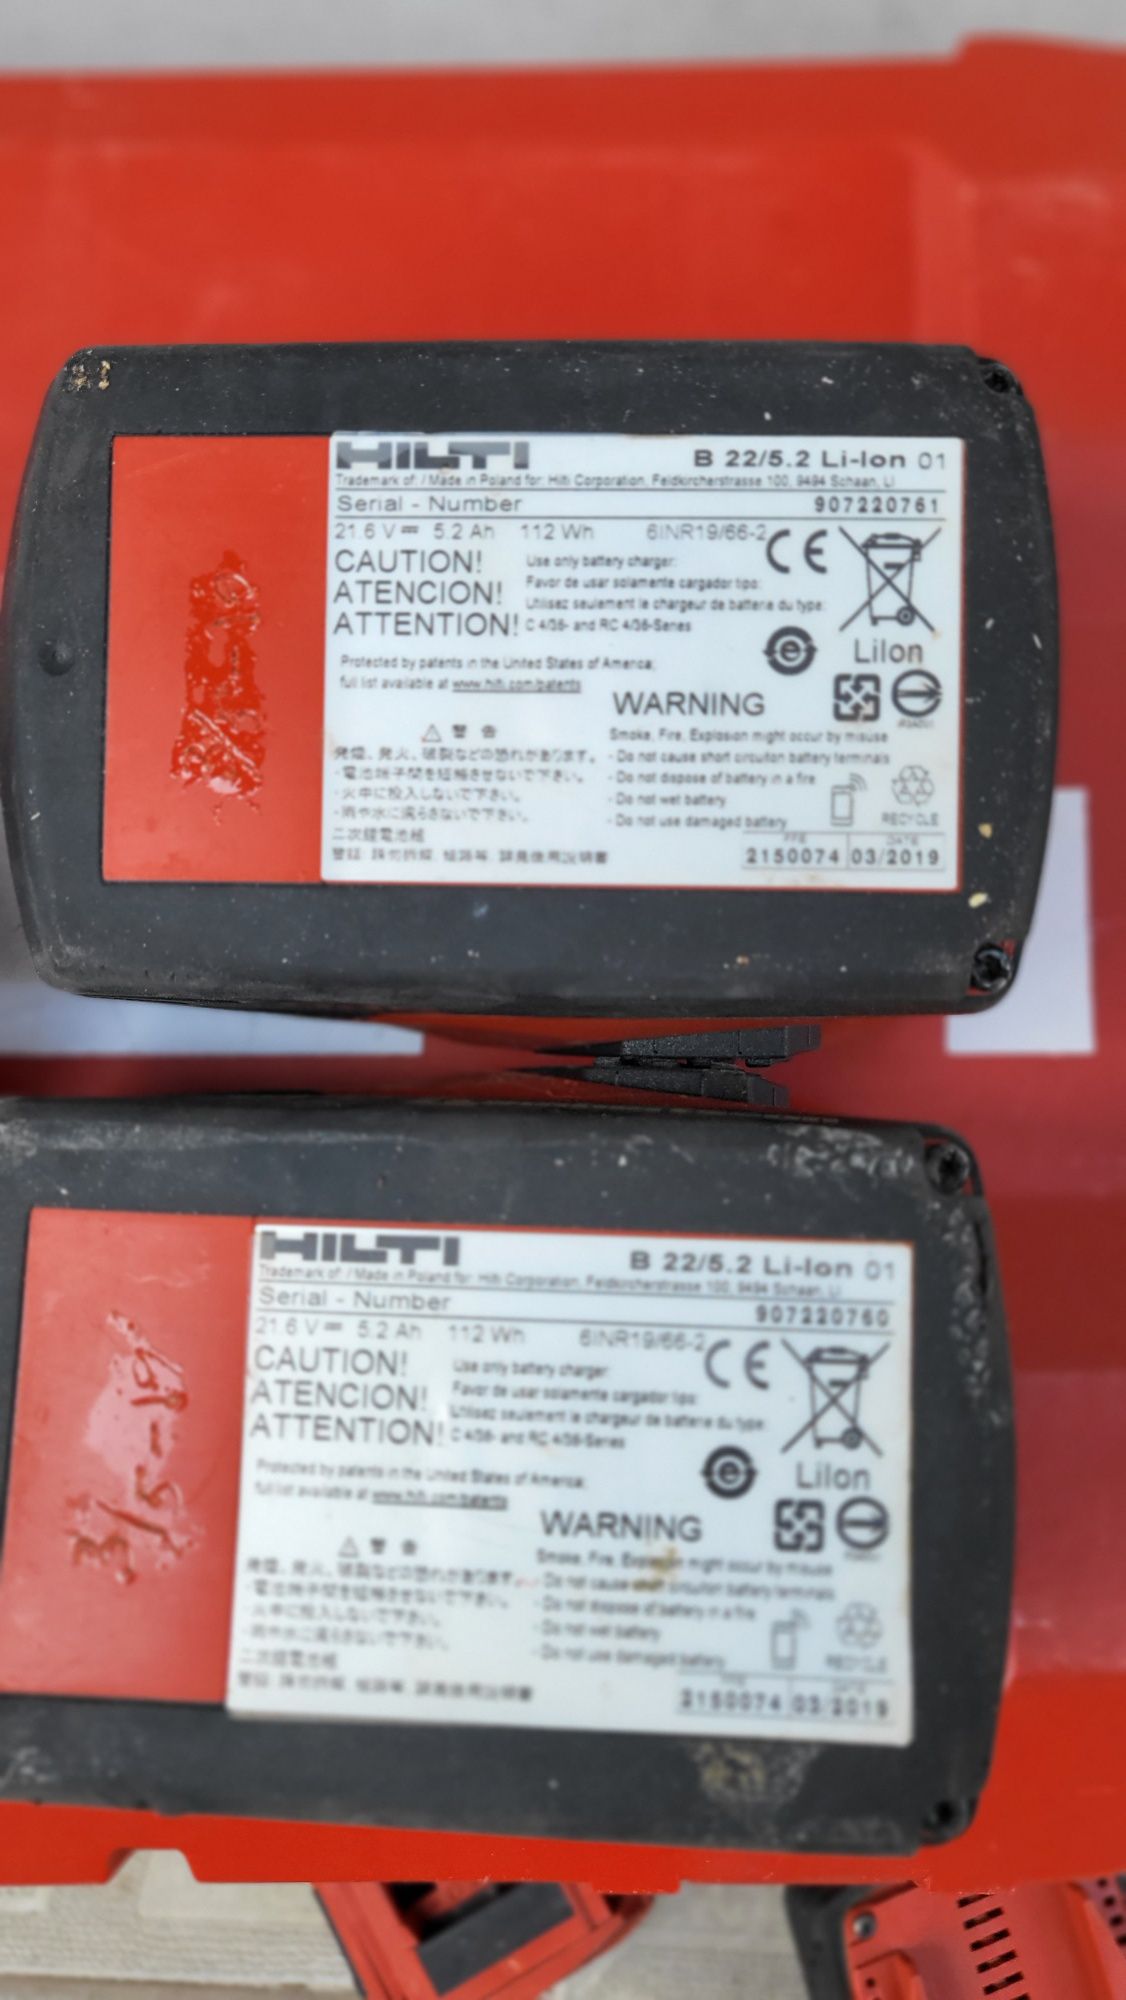 Батерии  Hilti B22 5,2 Li-ion